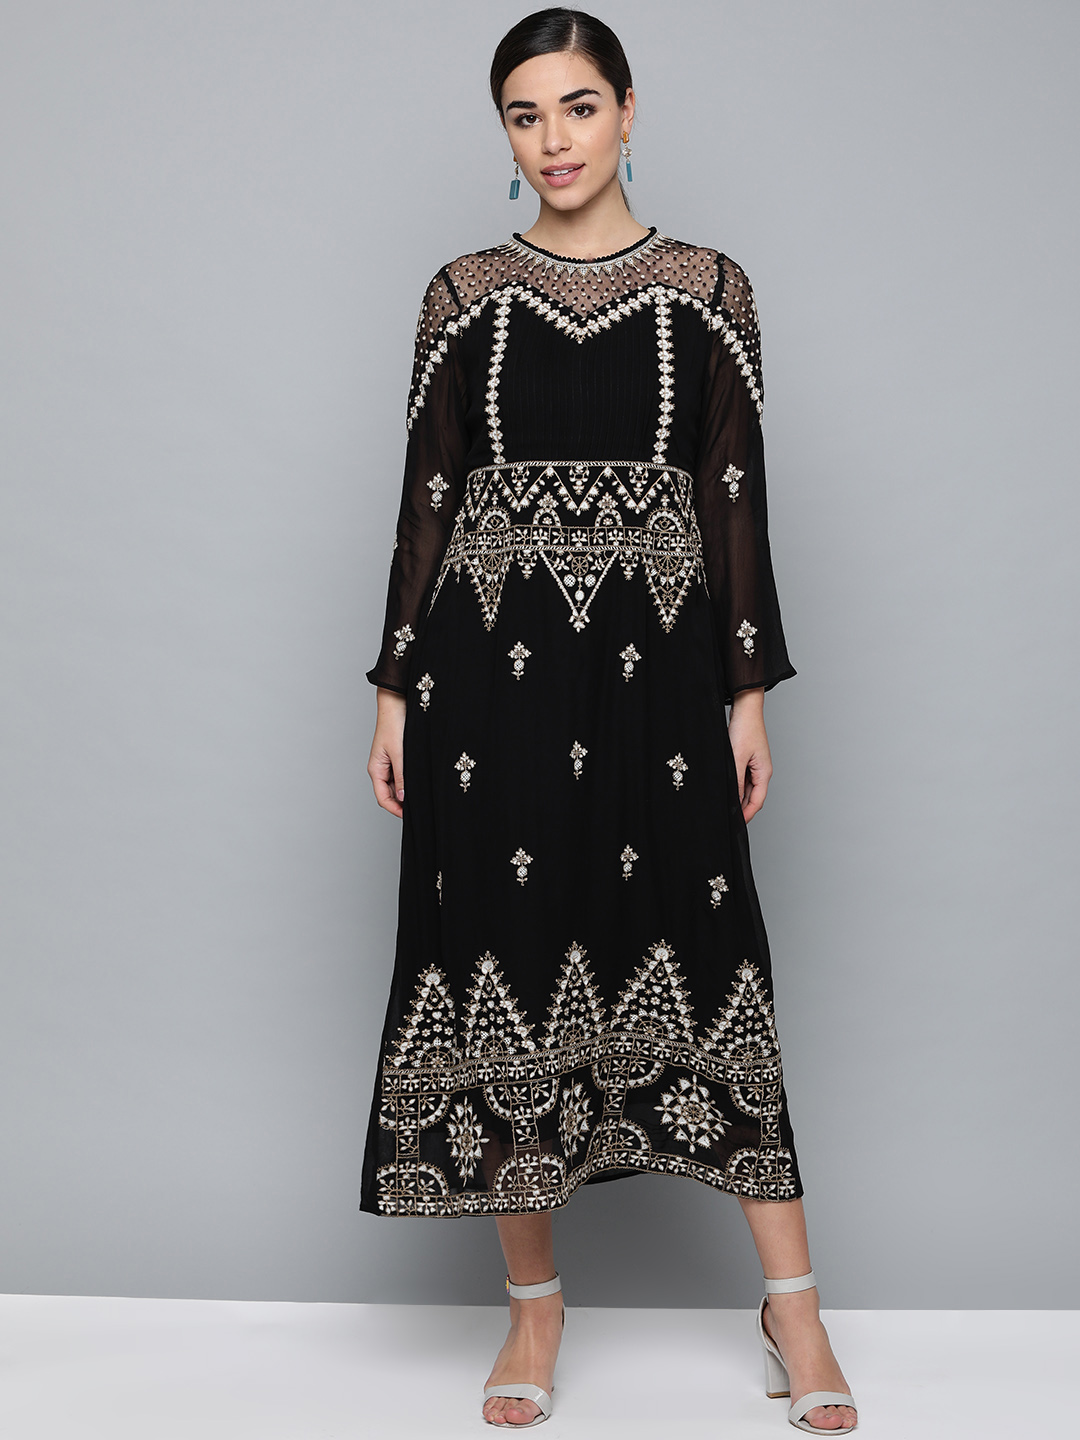 Label Ritu Kumar Women Black & Off-White Embroidered Semi-Sheer A-Line Dress Price in India